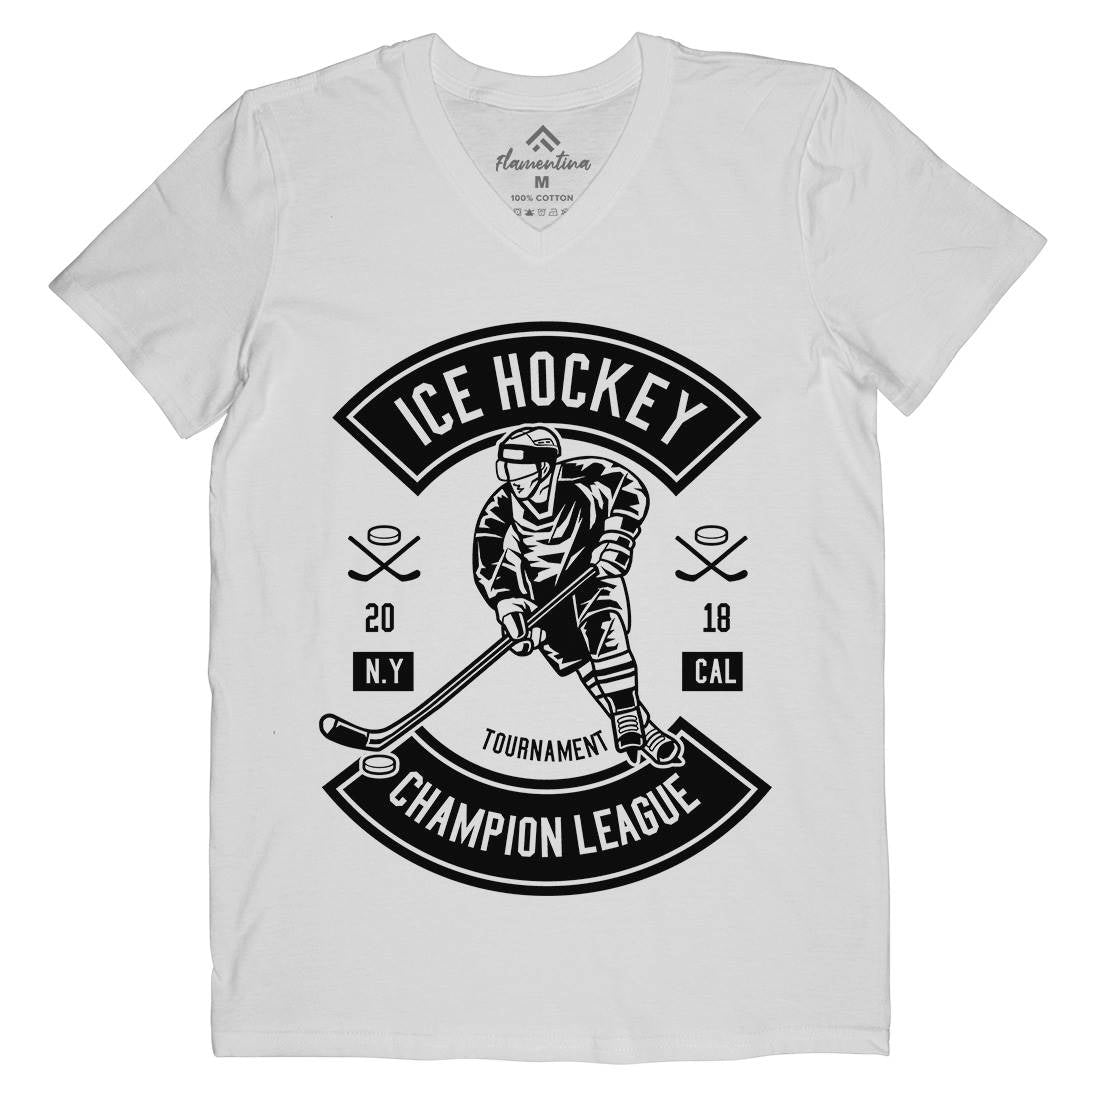 Ice Hockey Champion League Mens Organic V-Neck T-Shirt Sport B564